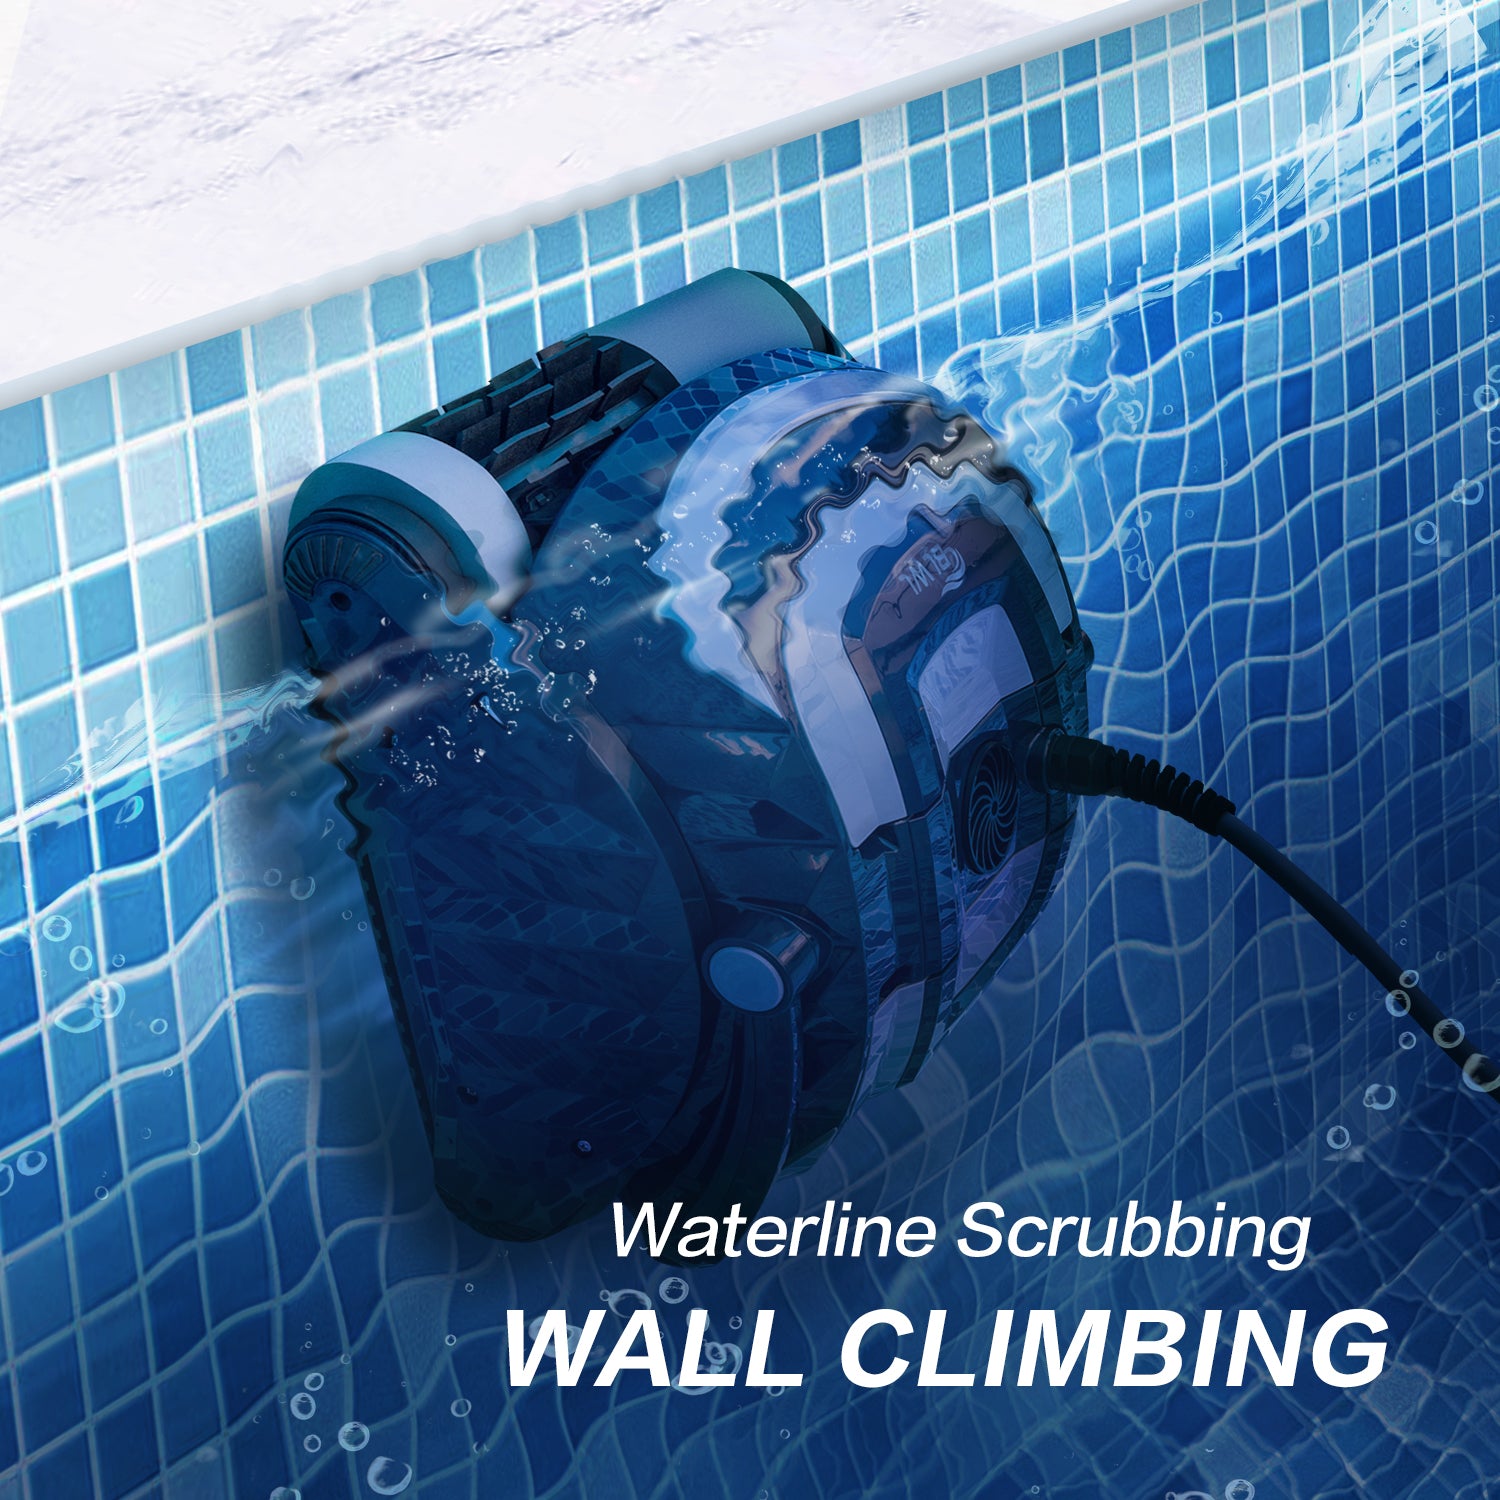 BLWL Robotic Pool Cleaner,Automatic Swimming Pool Vacuum,Wall Climbing